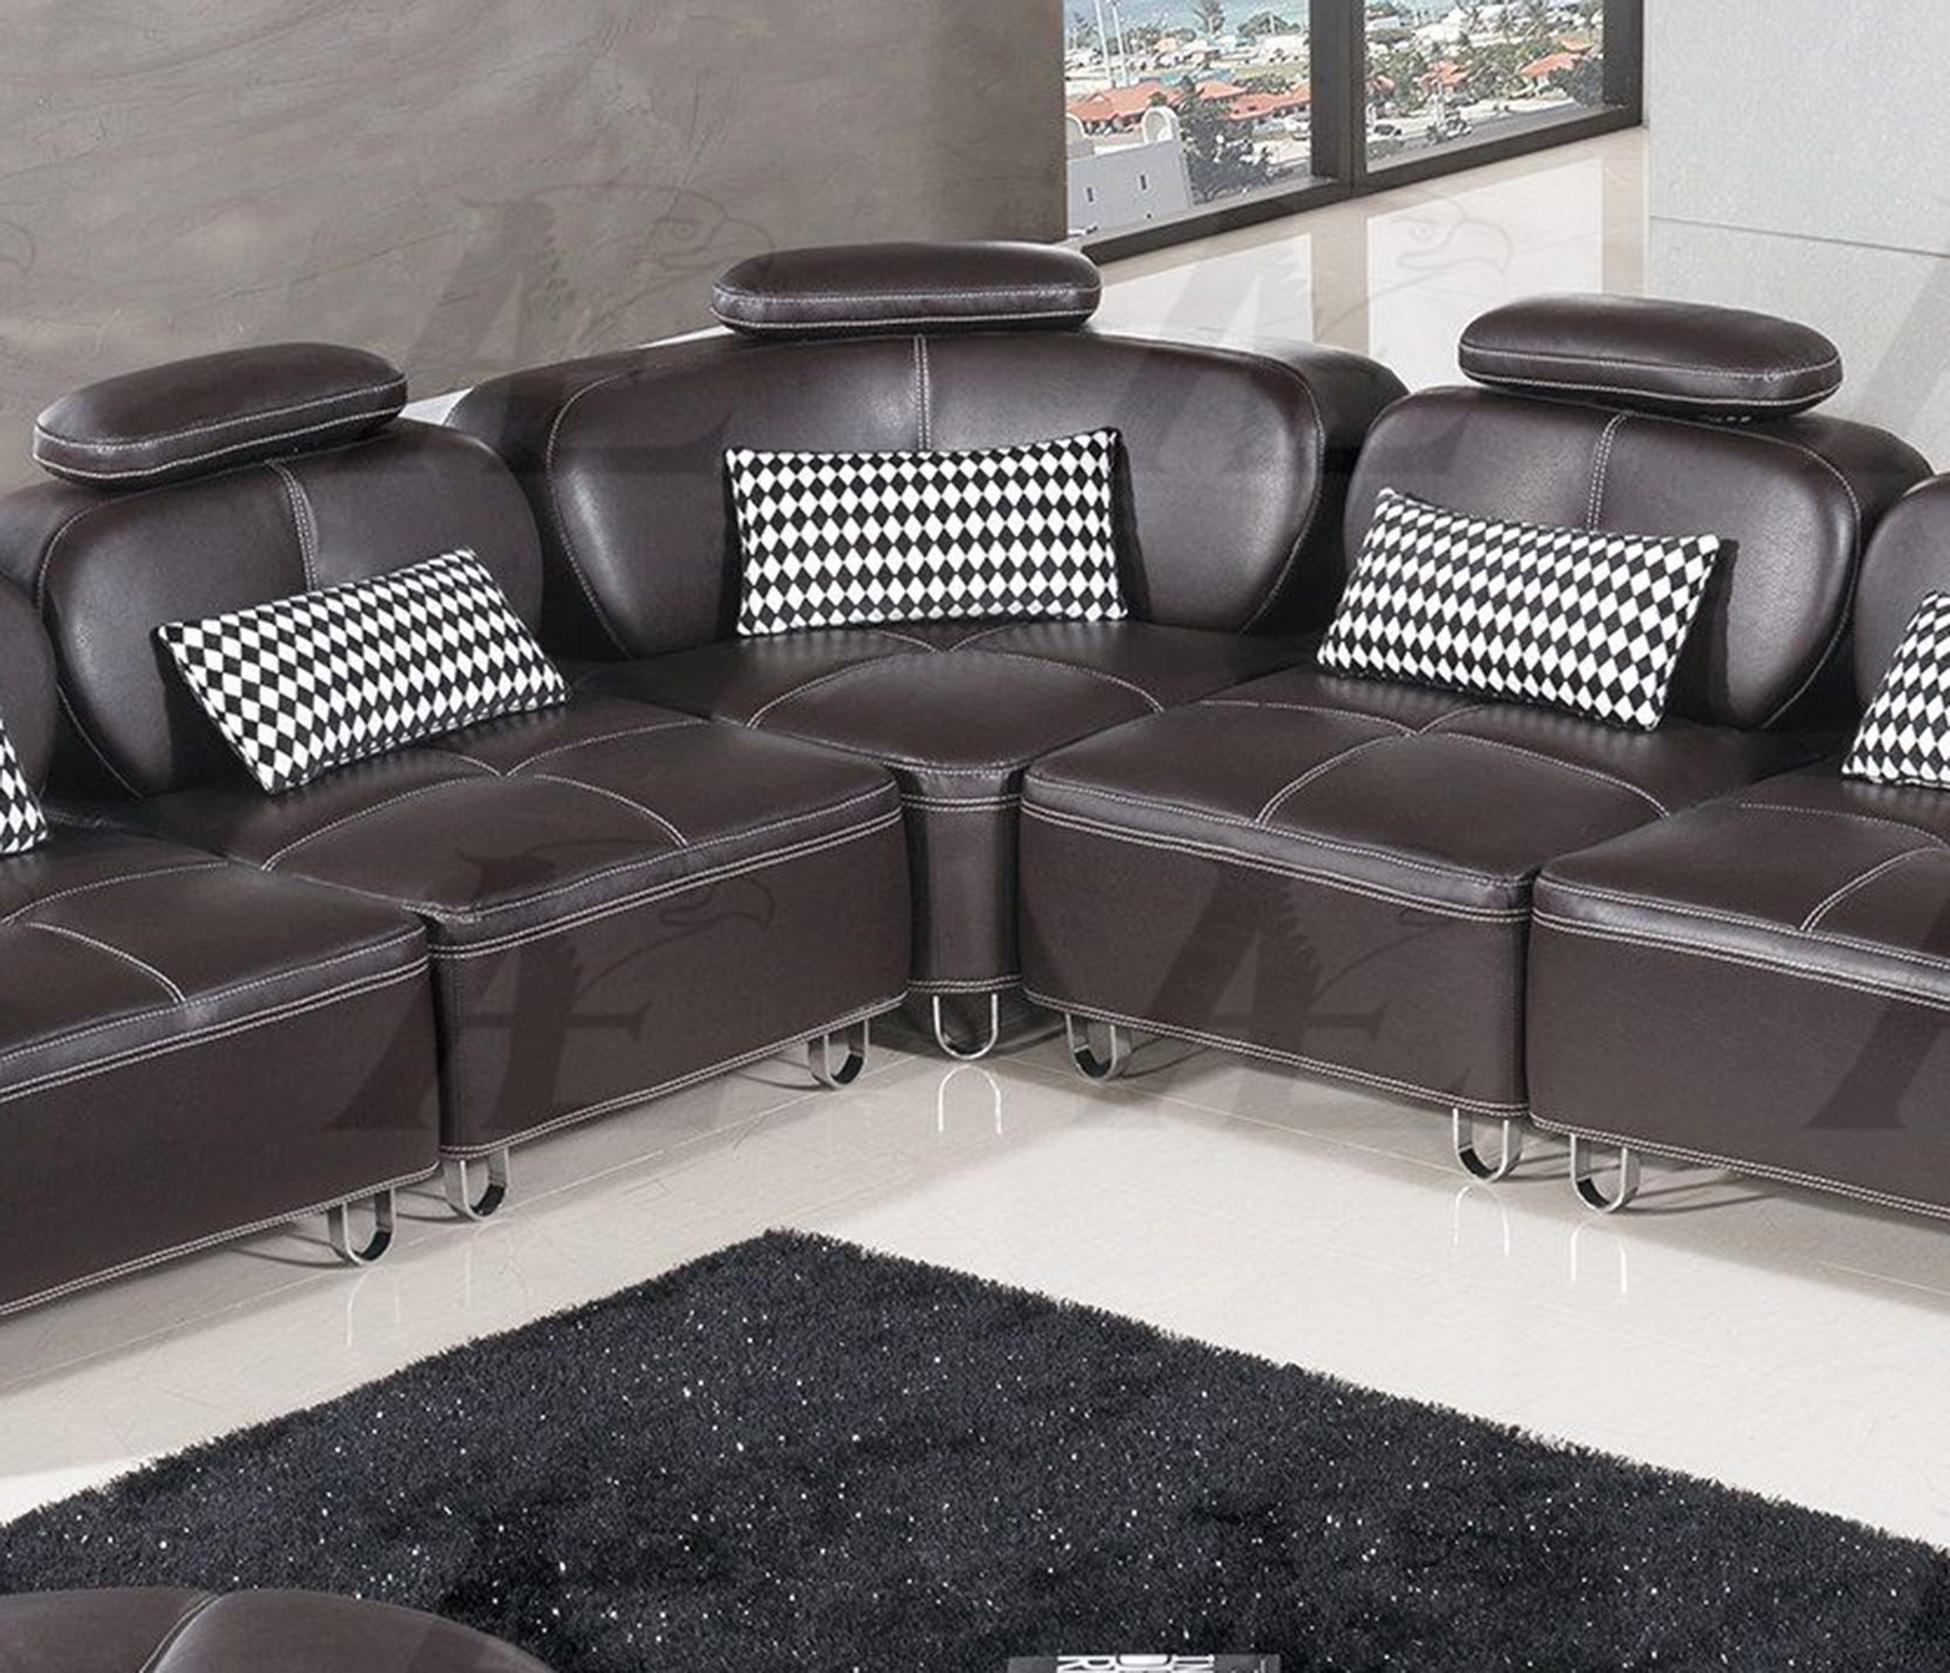 

    
American Eagle Furniture AE-L607M-DC Sectional Sofa Set Dark Chocolate AE-L607M-DC
